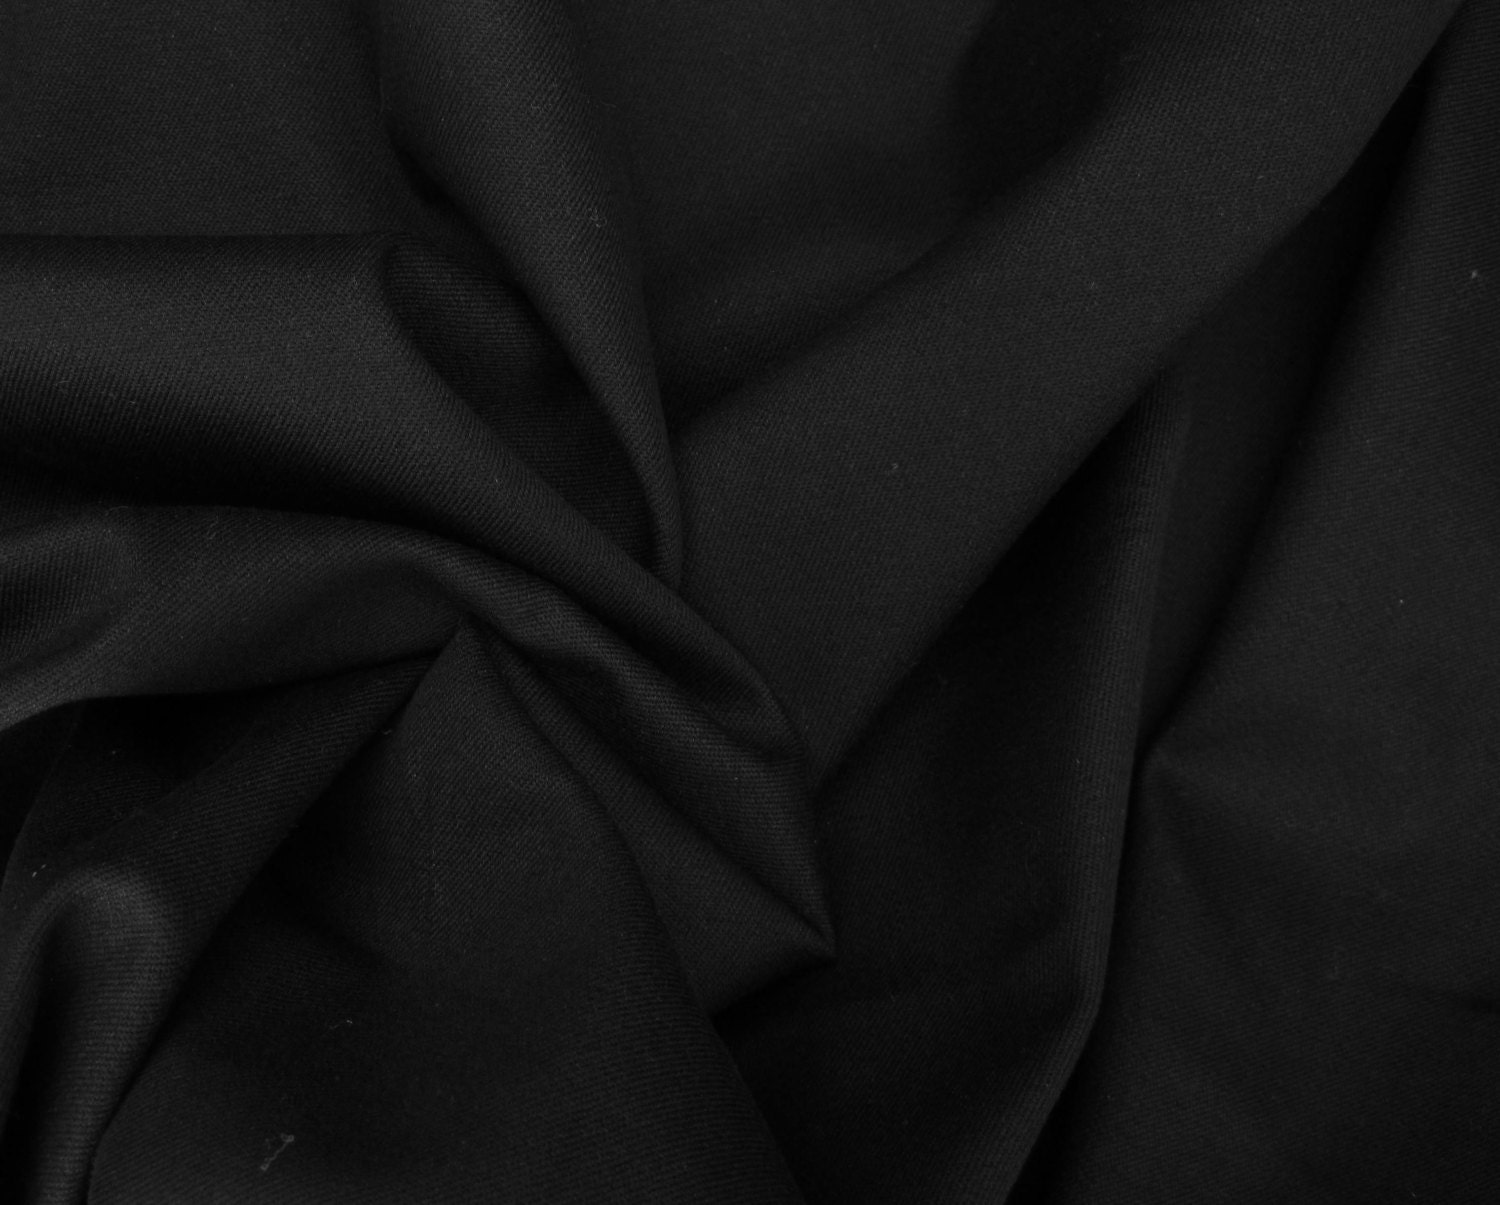 BLACK Cotton Twill Spandex Fabric 4 Way Stretch Fabric by the